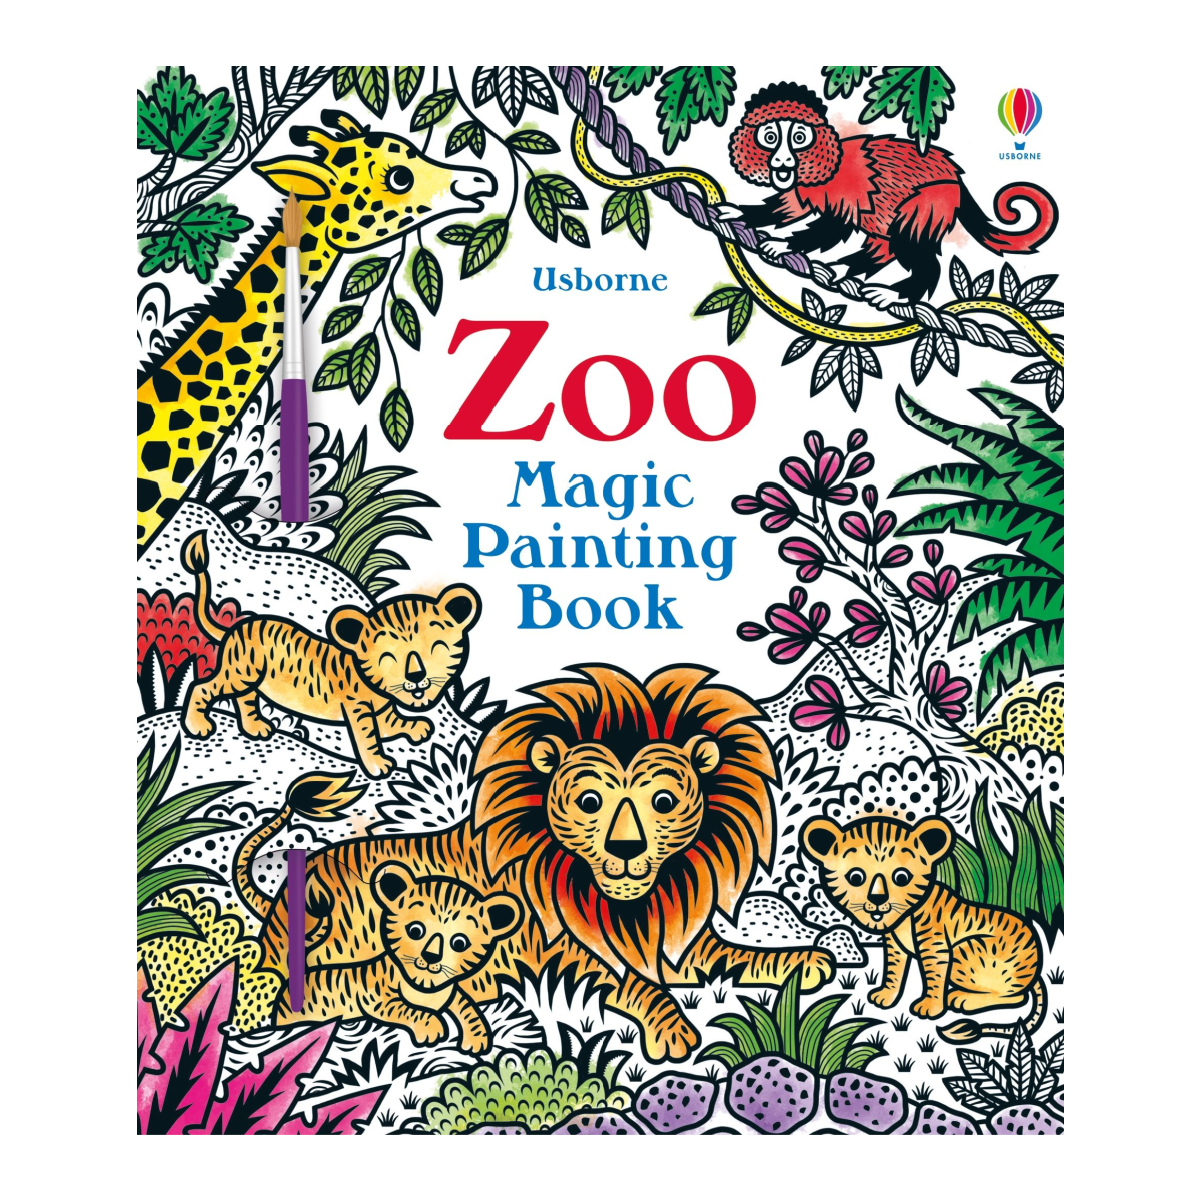 Usborne Books | Magic Painting Book - Zoo